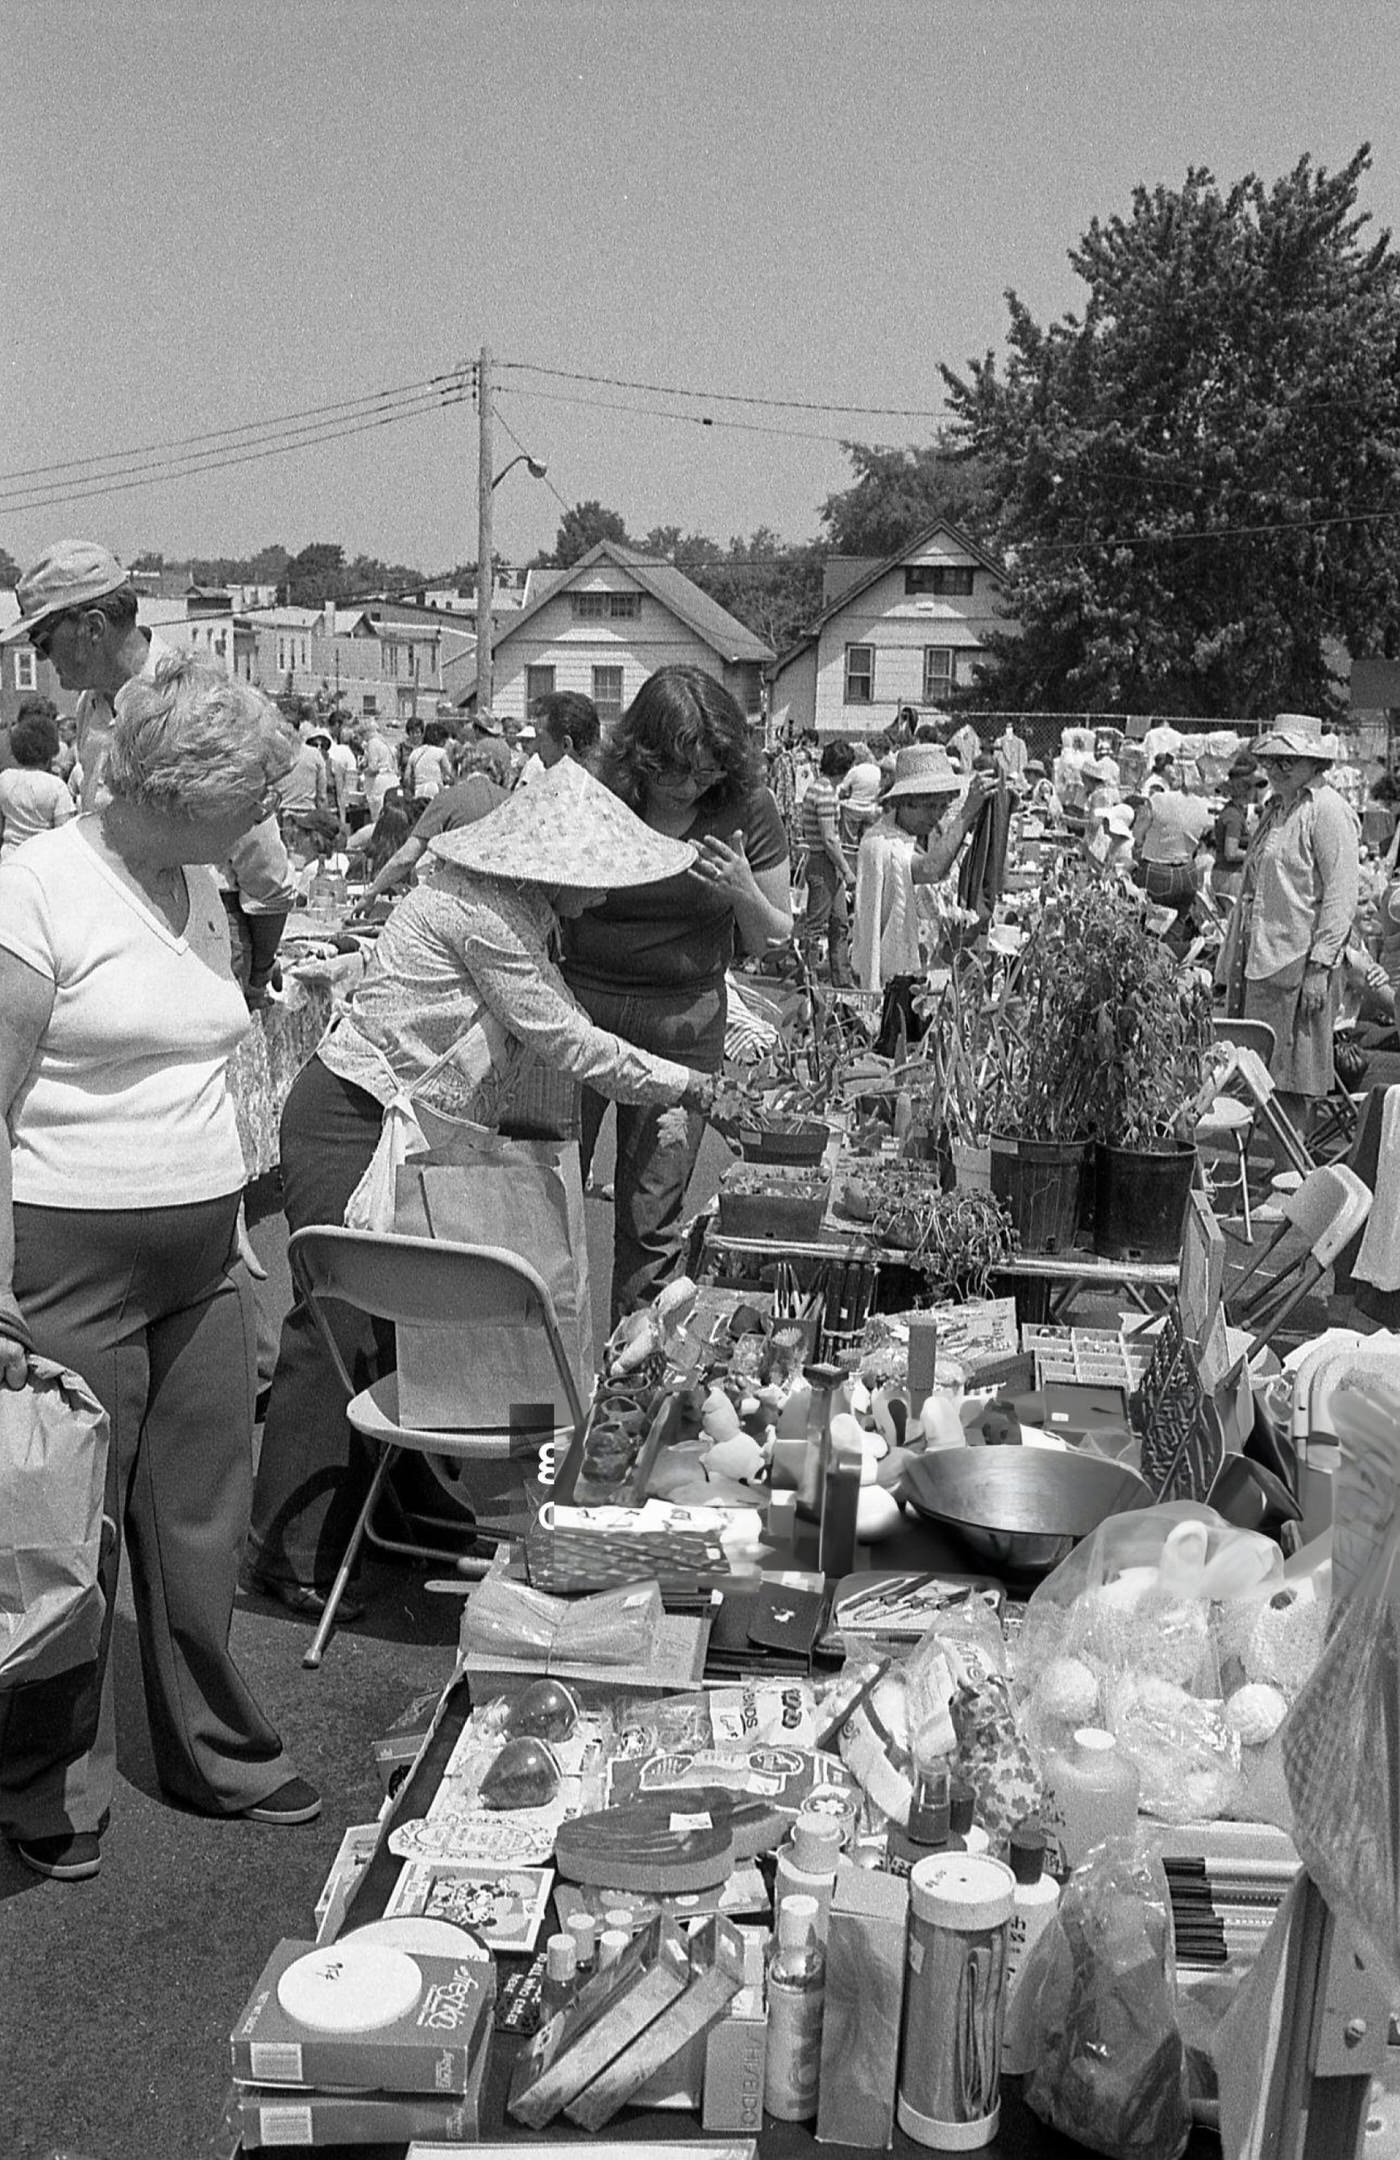 People Browse Vendor'S Tables At An Outdoor Flea Market In Maspeth, Queens, 1981.